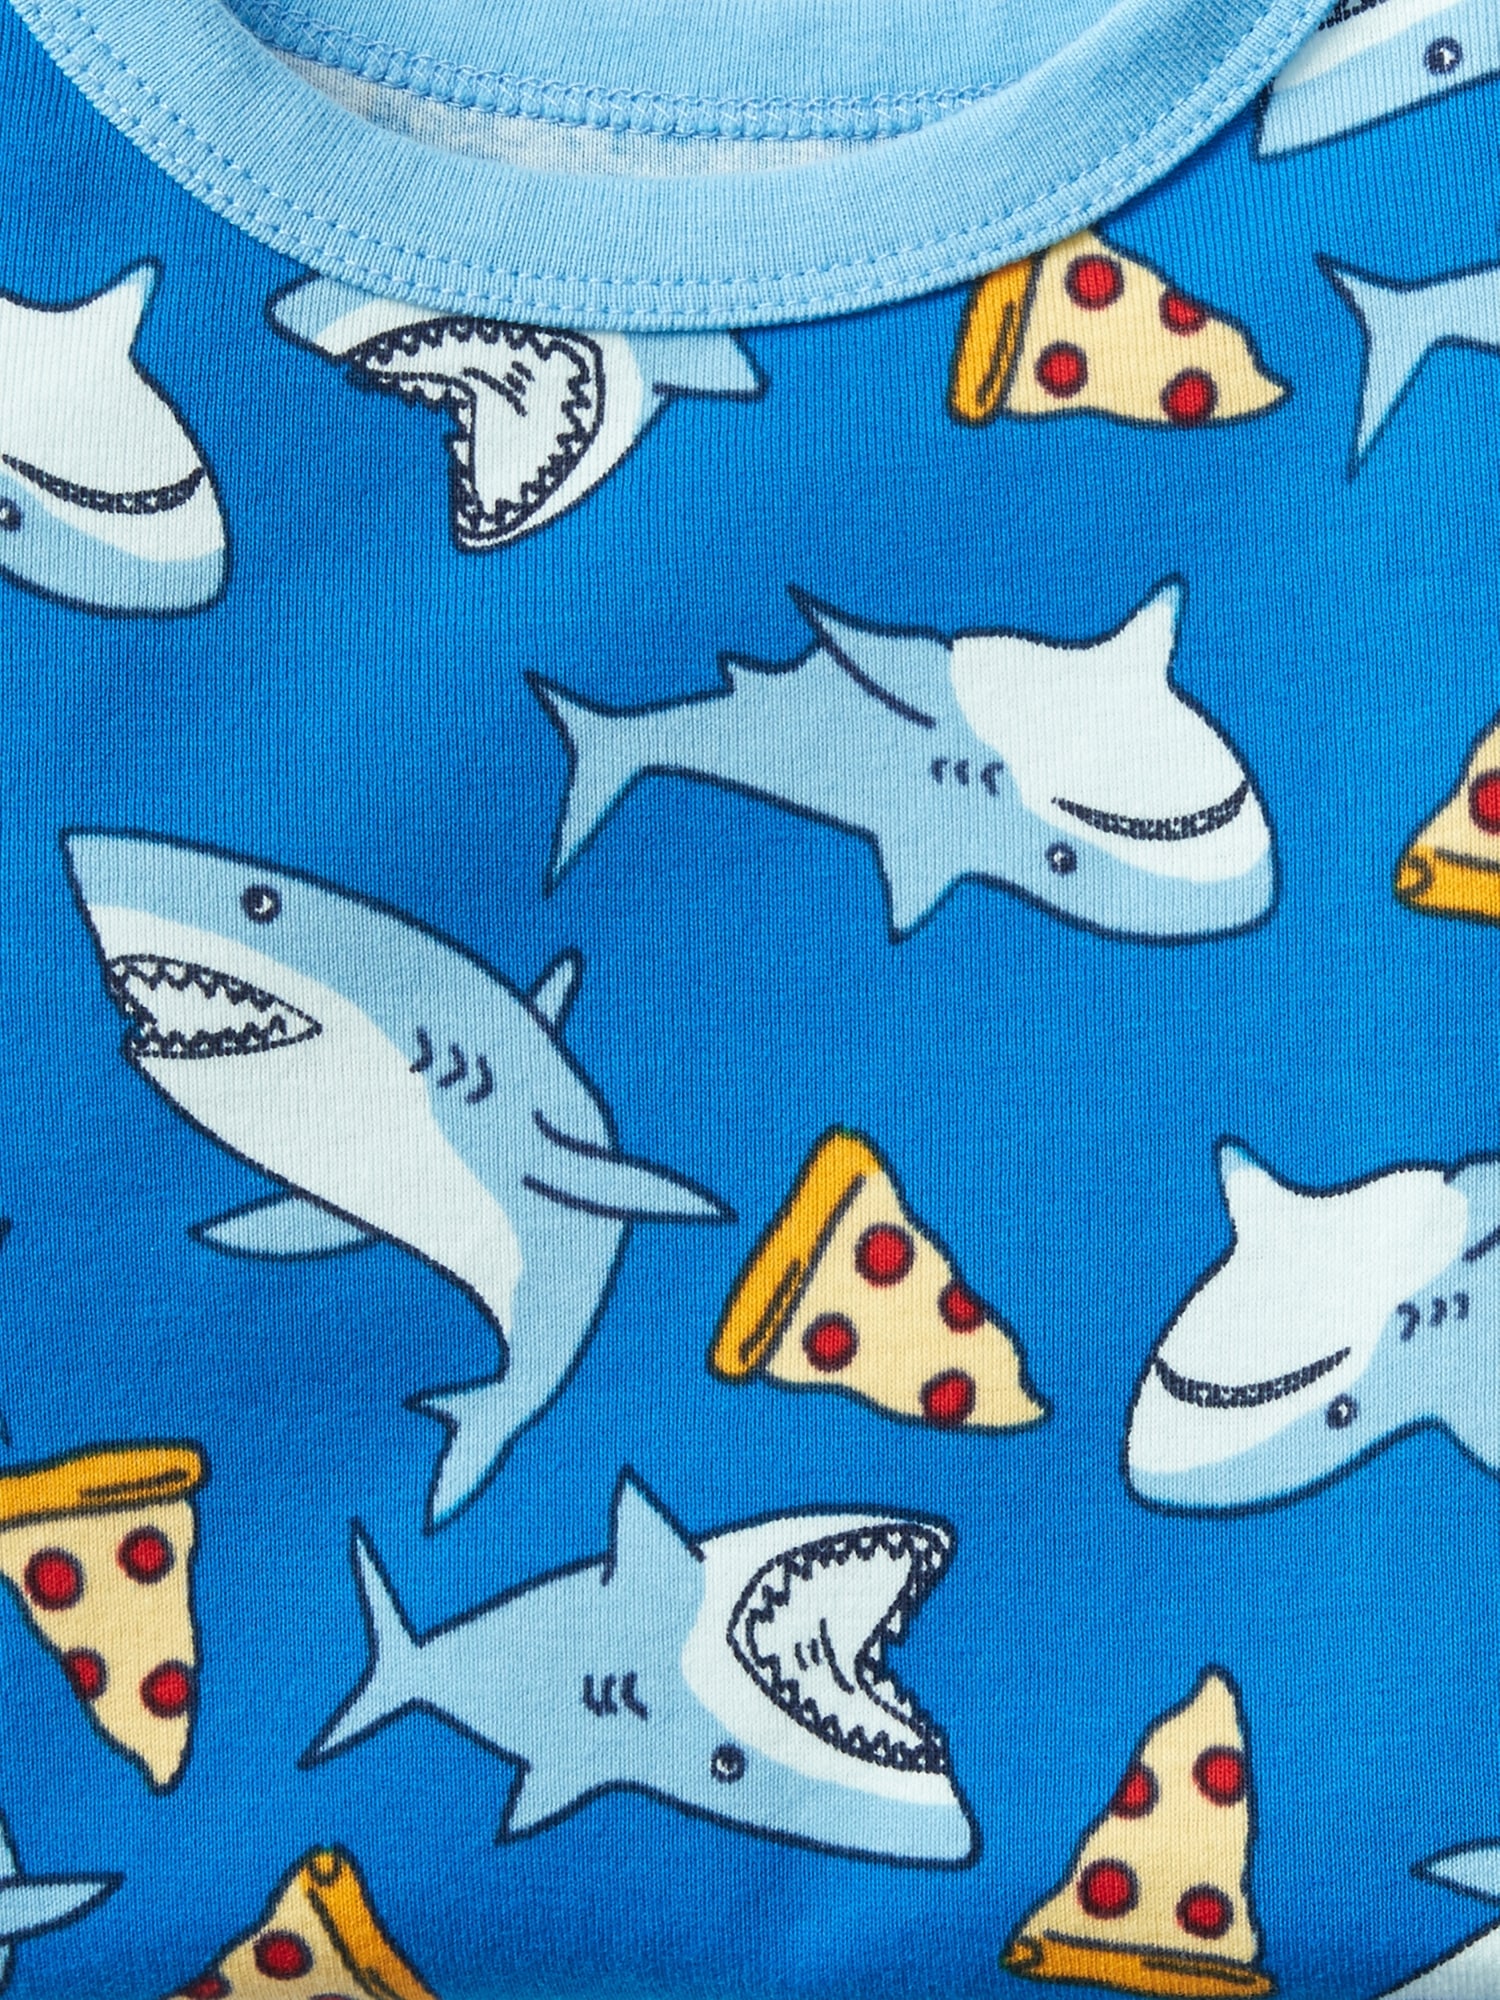 Shark pizza sleep set. 